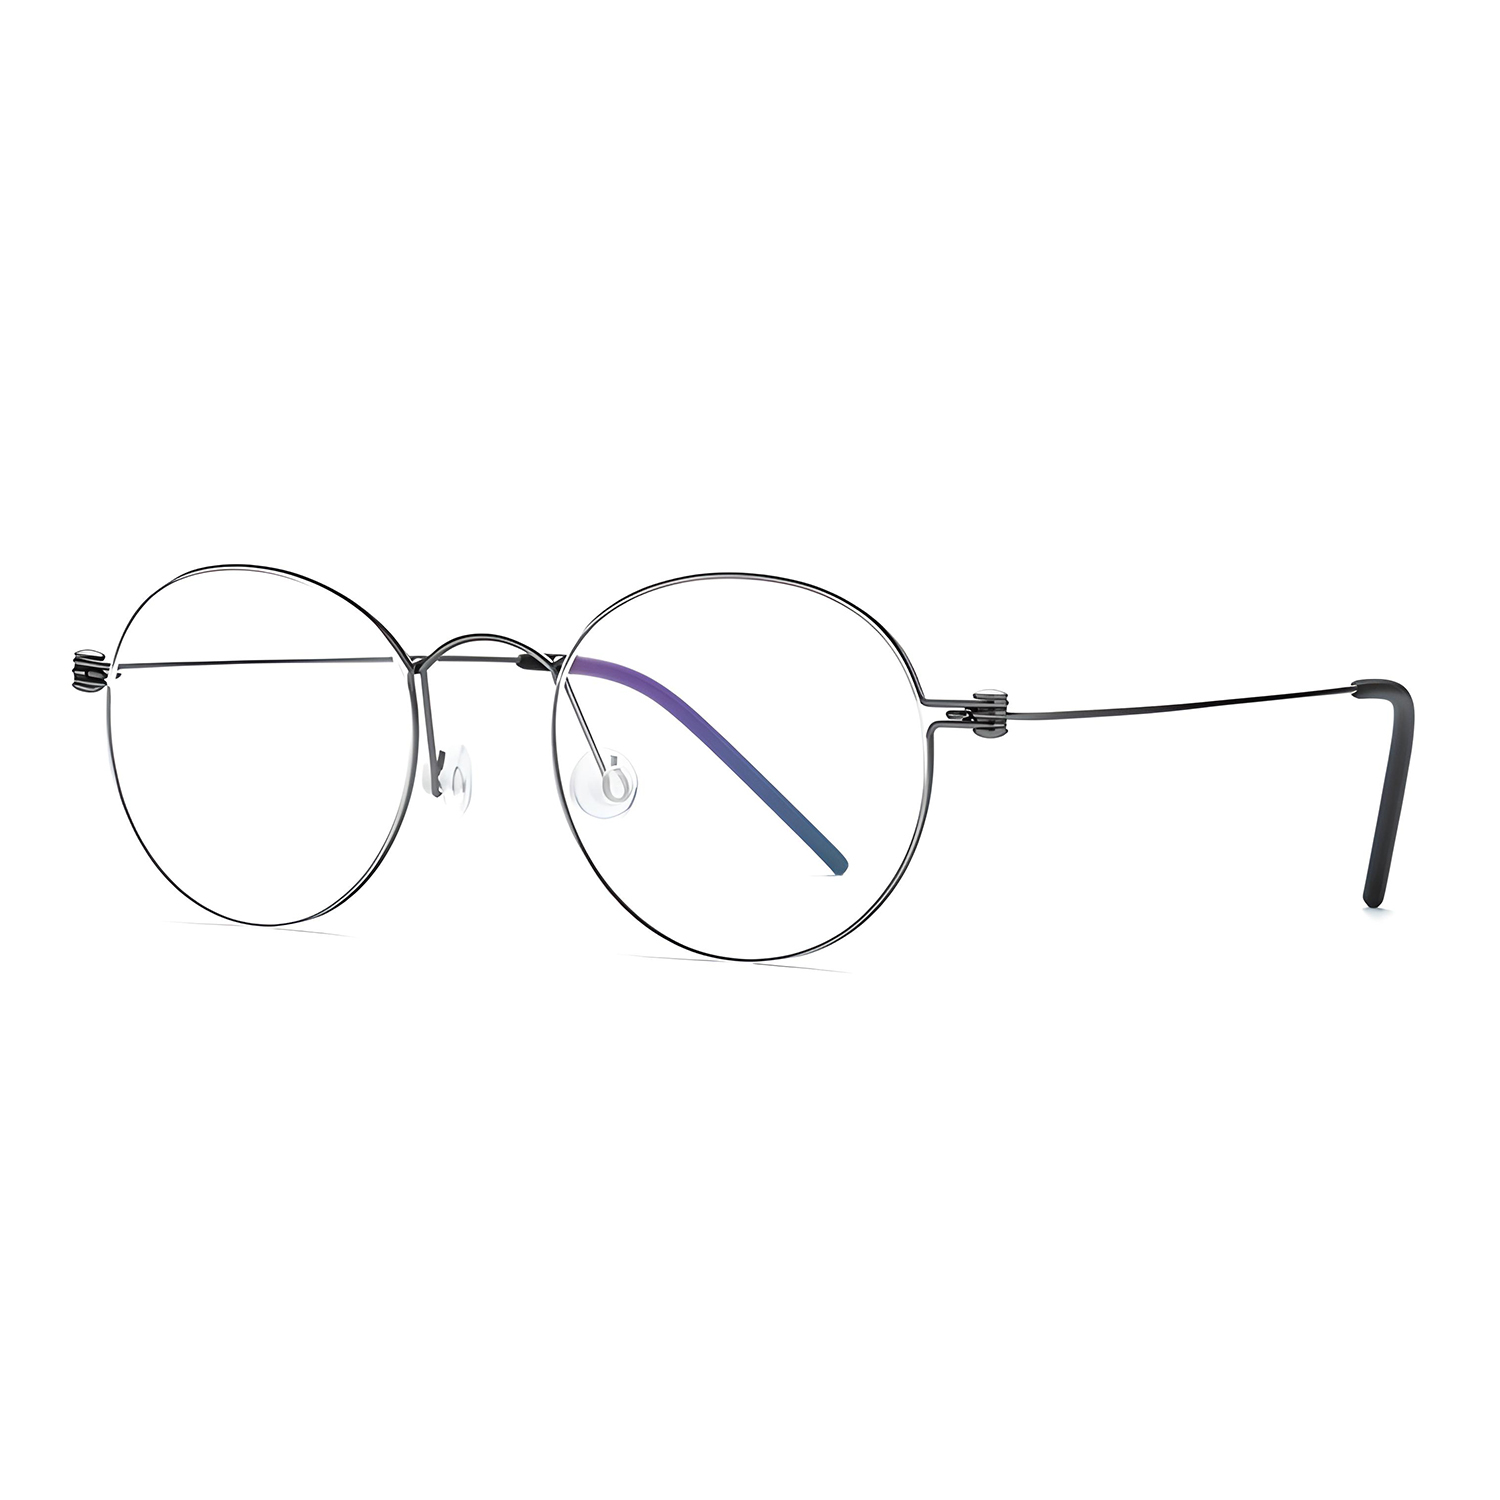 Retro Titanium Glasses Small Oval Spring Hinges Eyeglass Frames Women Mens